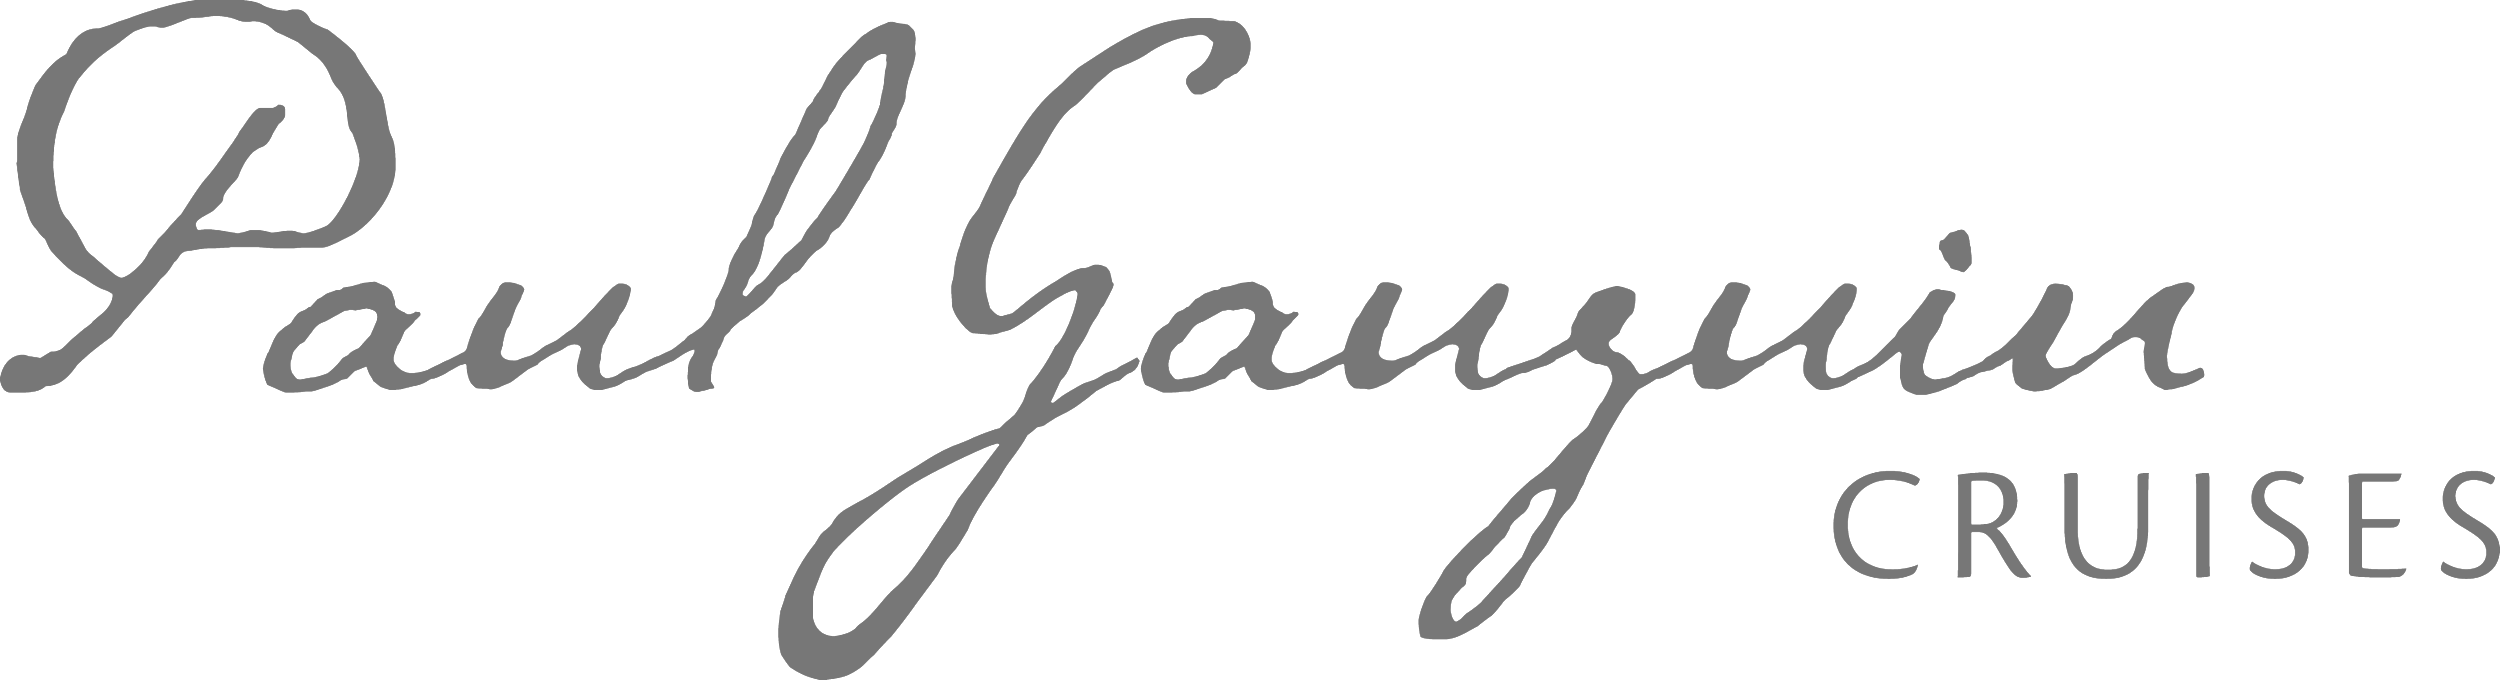 Paul-Gauguin-Cruises-Logo copy.png